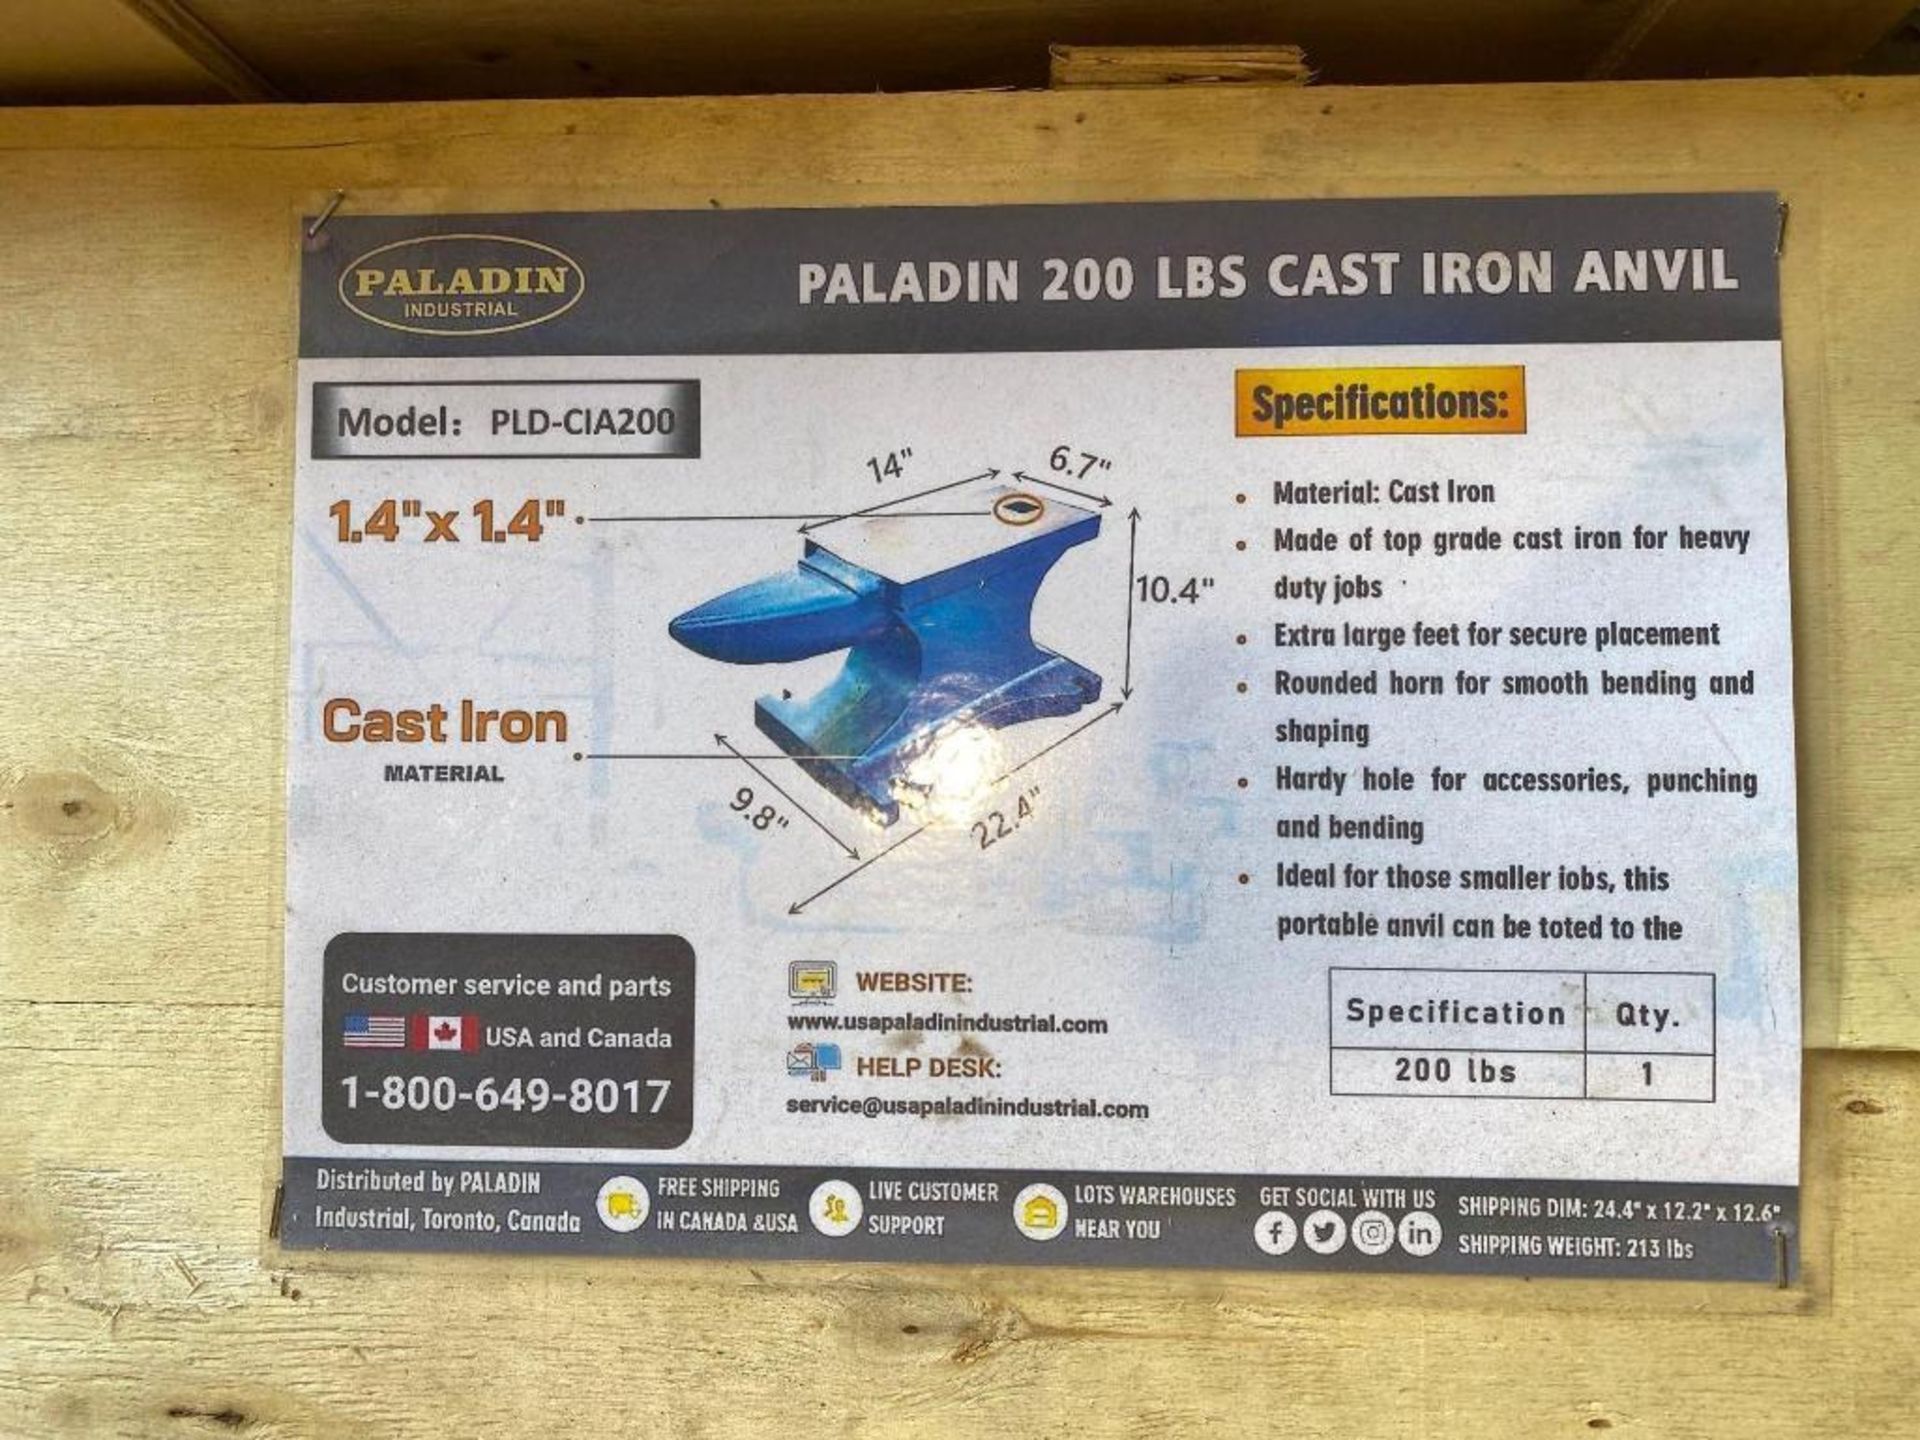 New Paladin 200lb Cast Iron Anvil Model PLD-CIA200 - Image 2 of 2